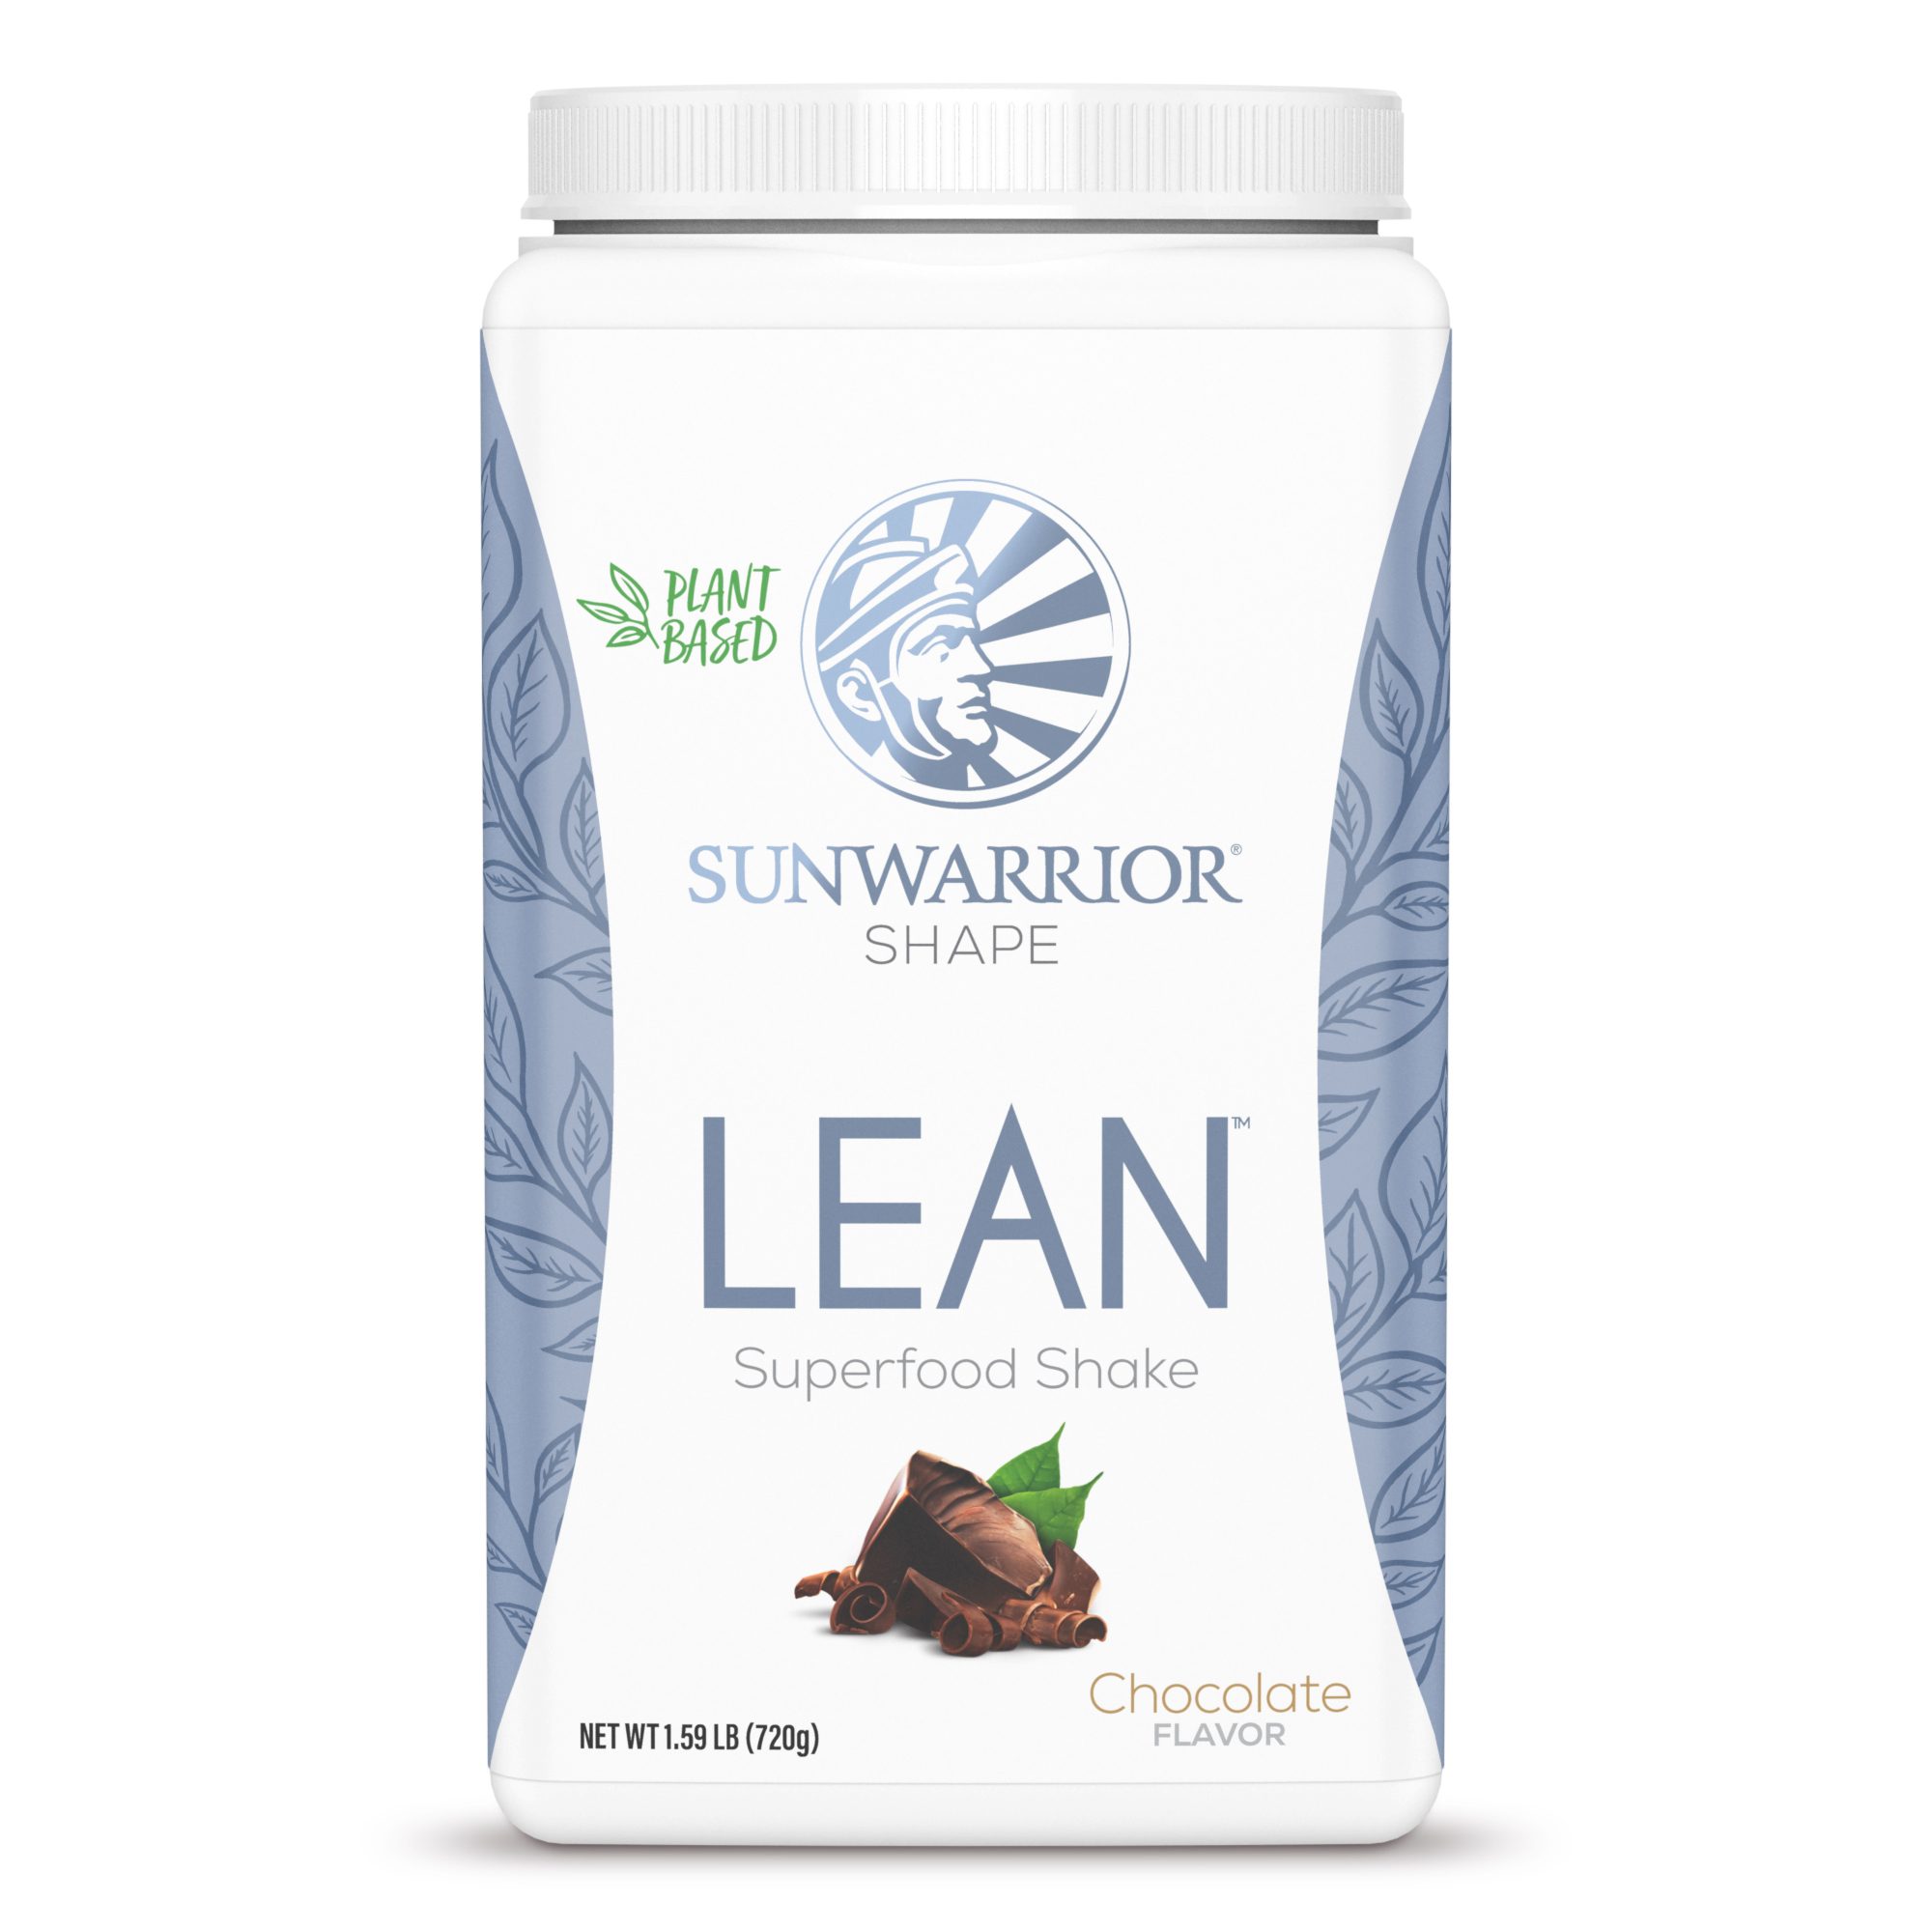 Sunwarrior Shape – Lean Superfood Shake – Chocolate – 720g (replacing Lean Meal Illumin8)